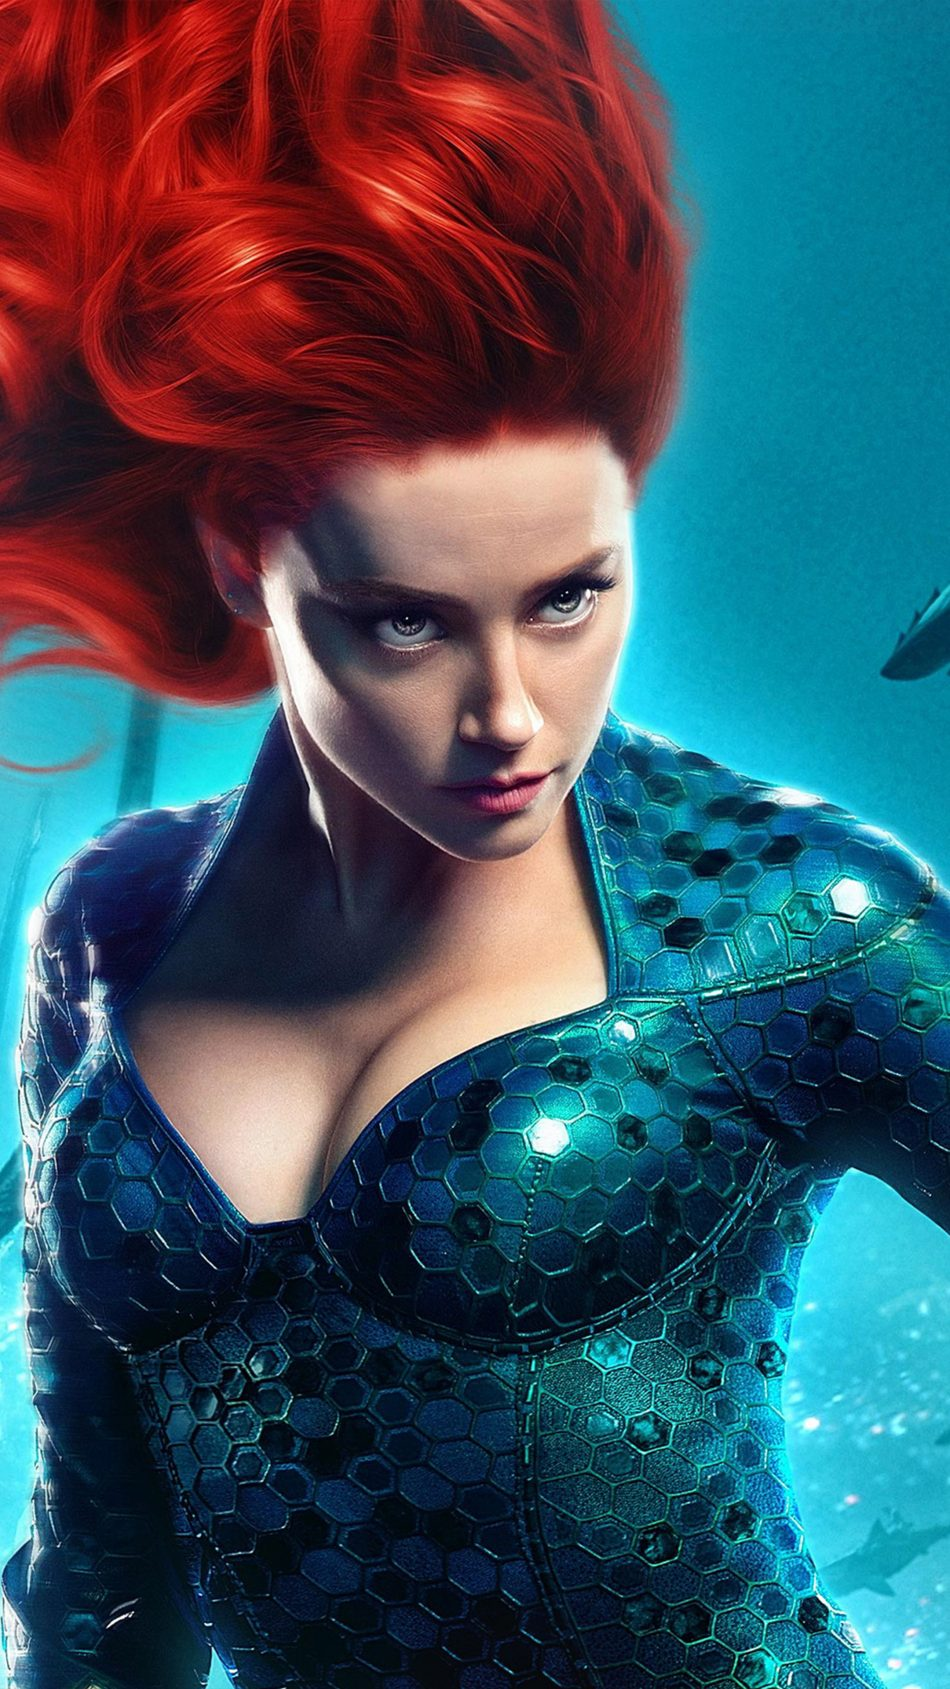 Download Amber Heard As Mera In Aquaman 2018 Free Pure 4K Ultra HD Mobile Wallpaper. Hollywood actress pics, Aquaman, Amber heard